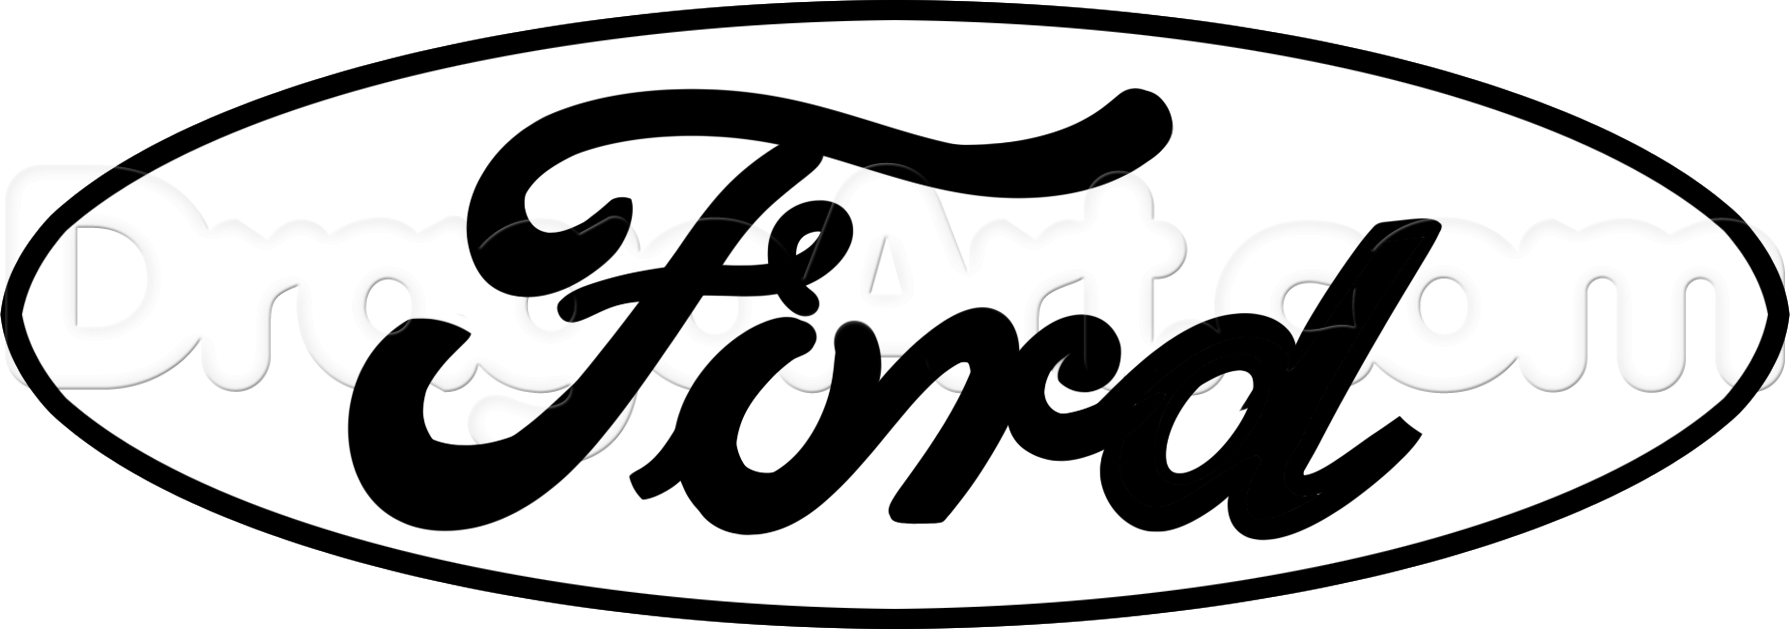 Cartoon Ford Logo - Ford Logo, Step by Step, Symbols, Pop Culture, FREE